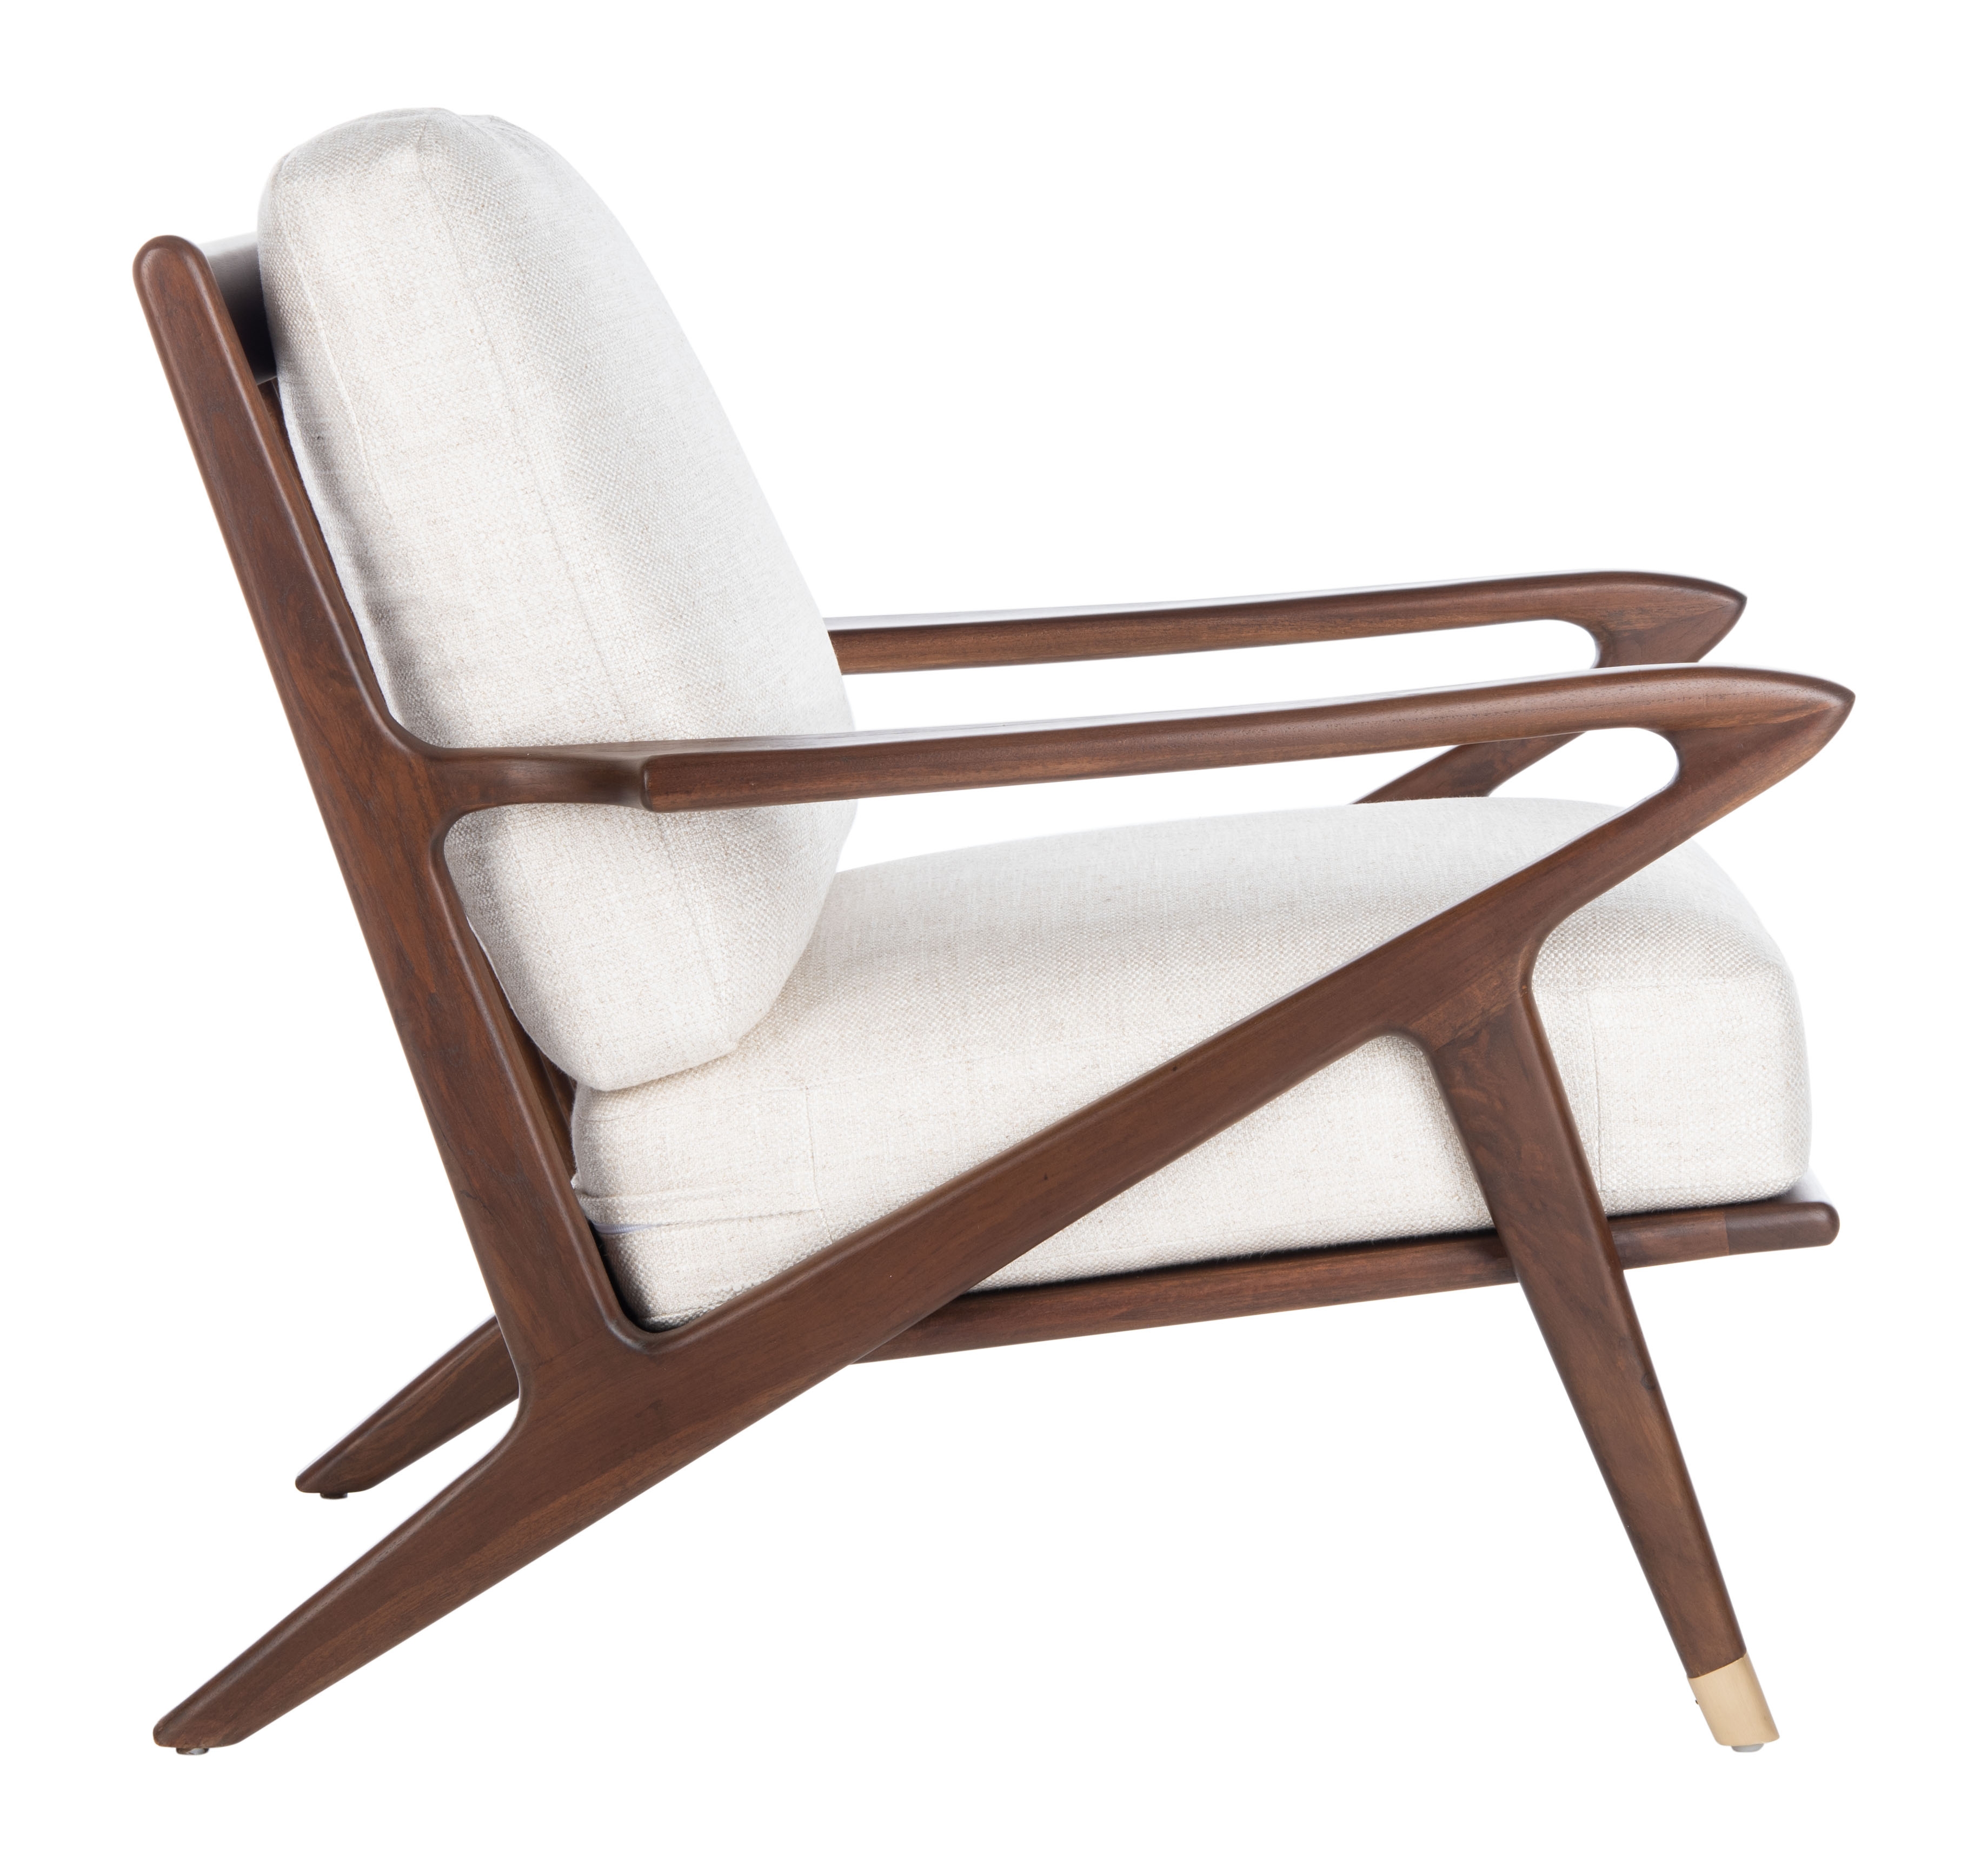 Killian Mid Century Accent Chair - Cream - Safavieh - Image 3